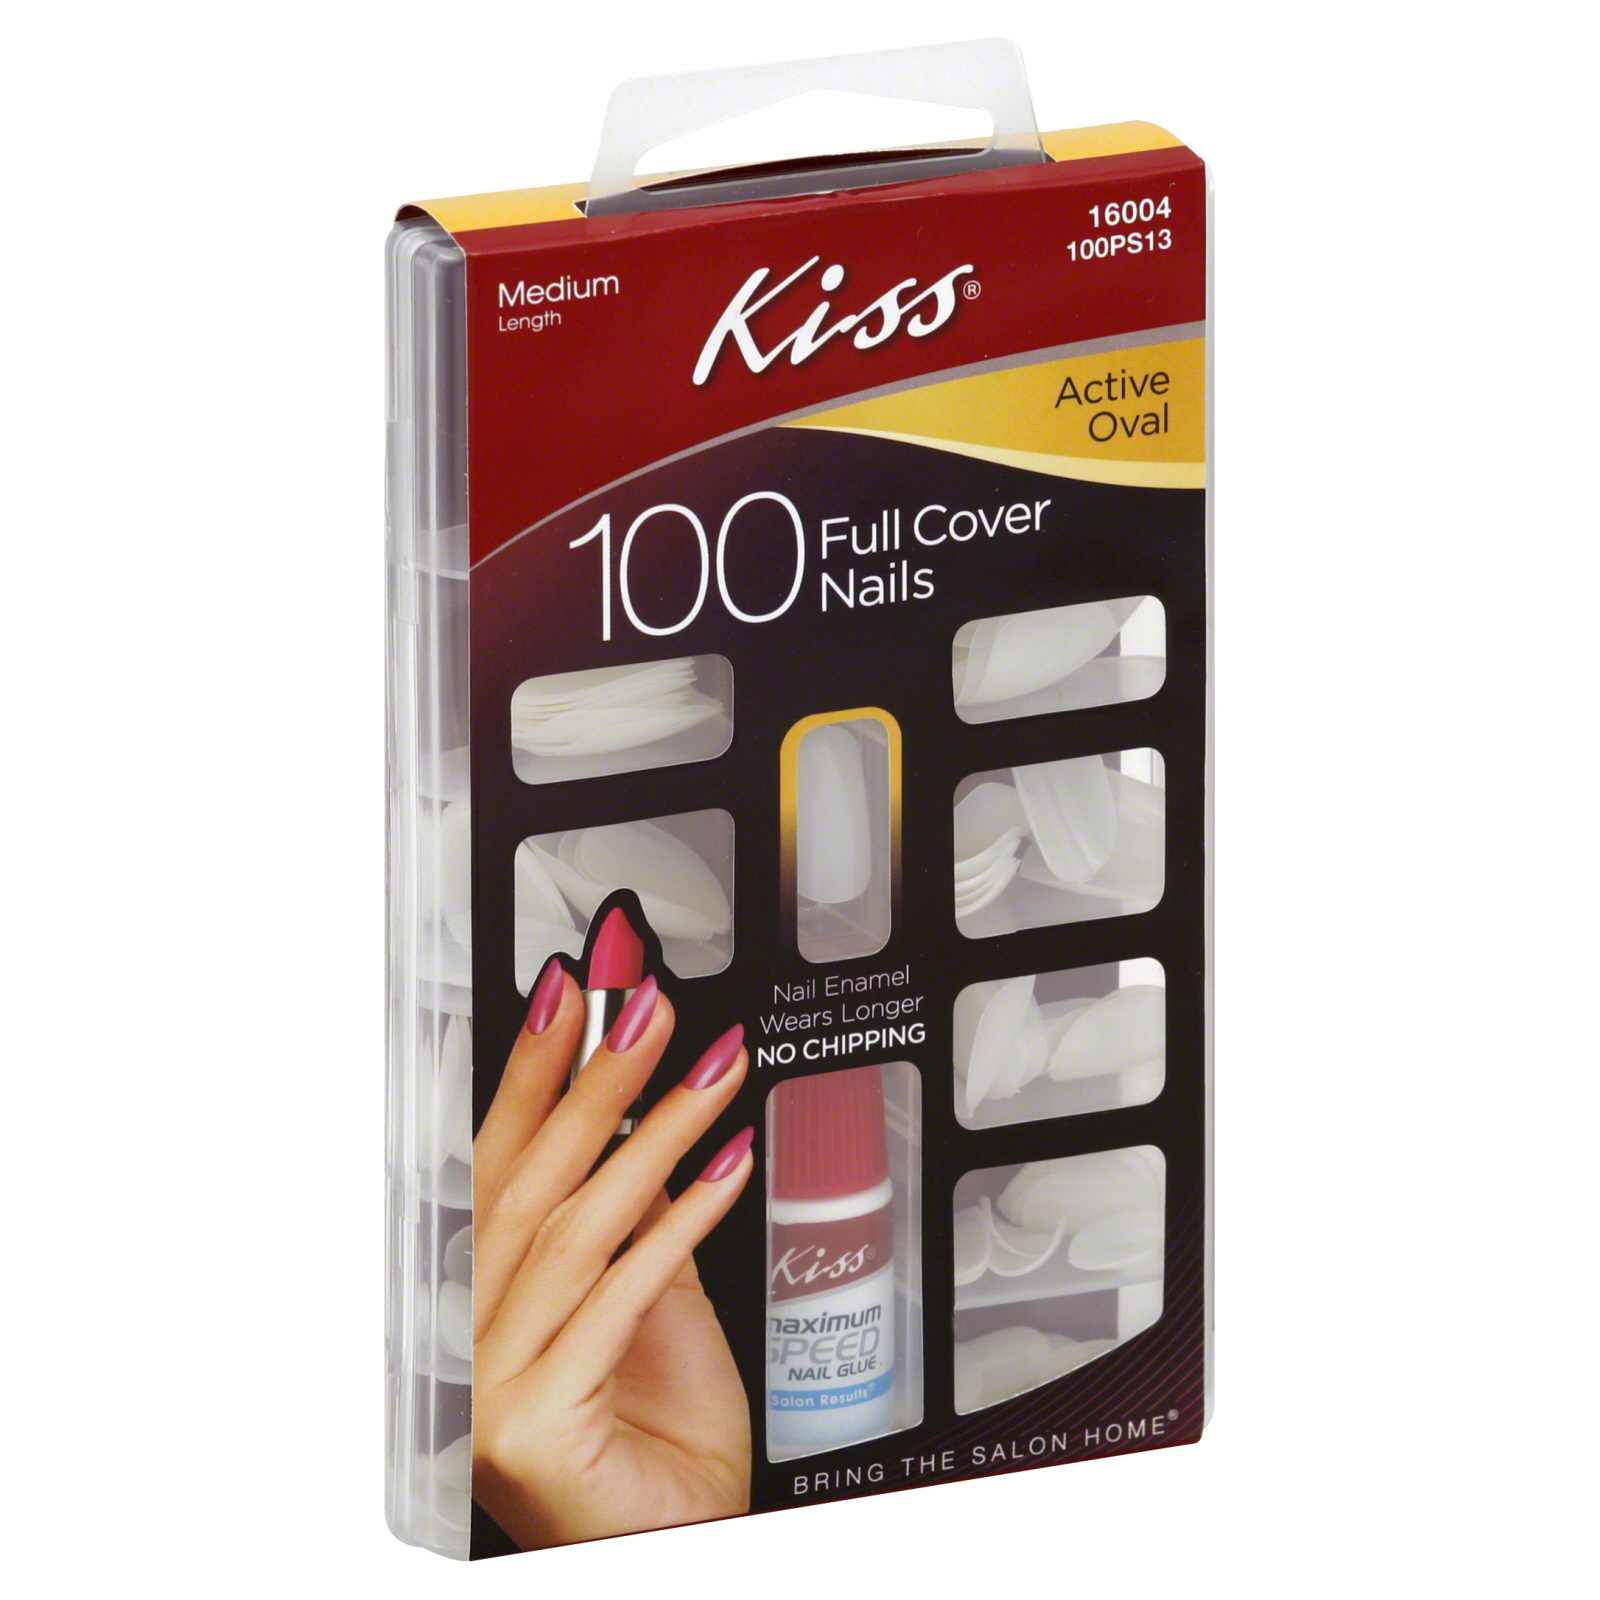 Kiss Full Cover Nails, Active Oval, Medium Length, 1 kit